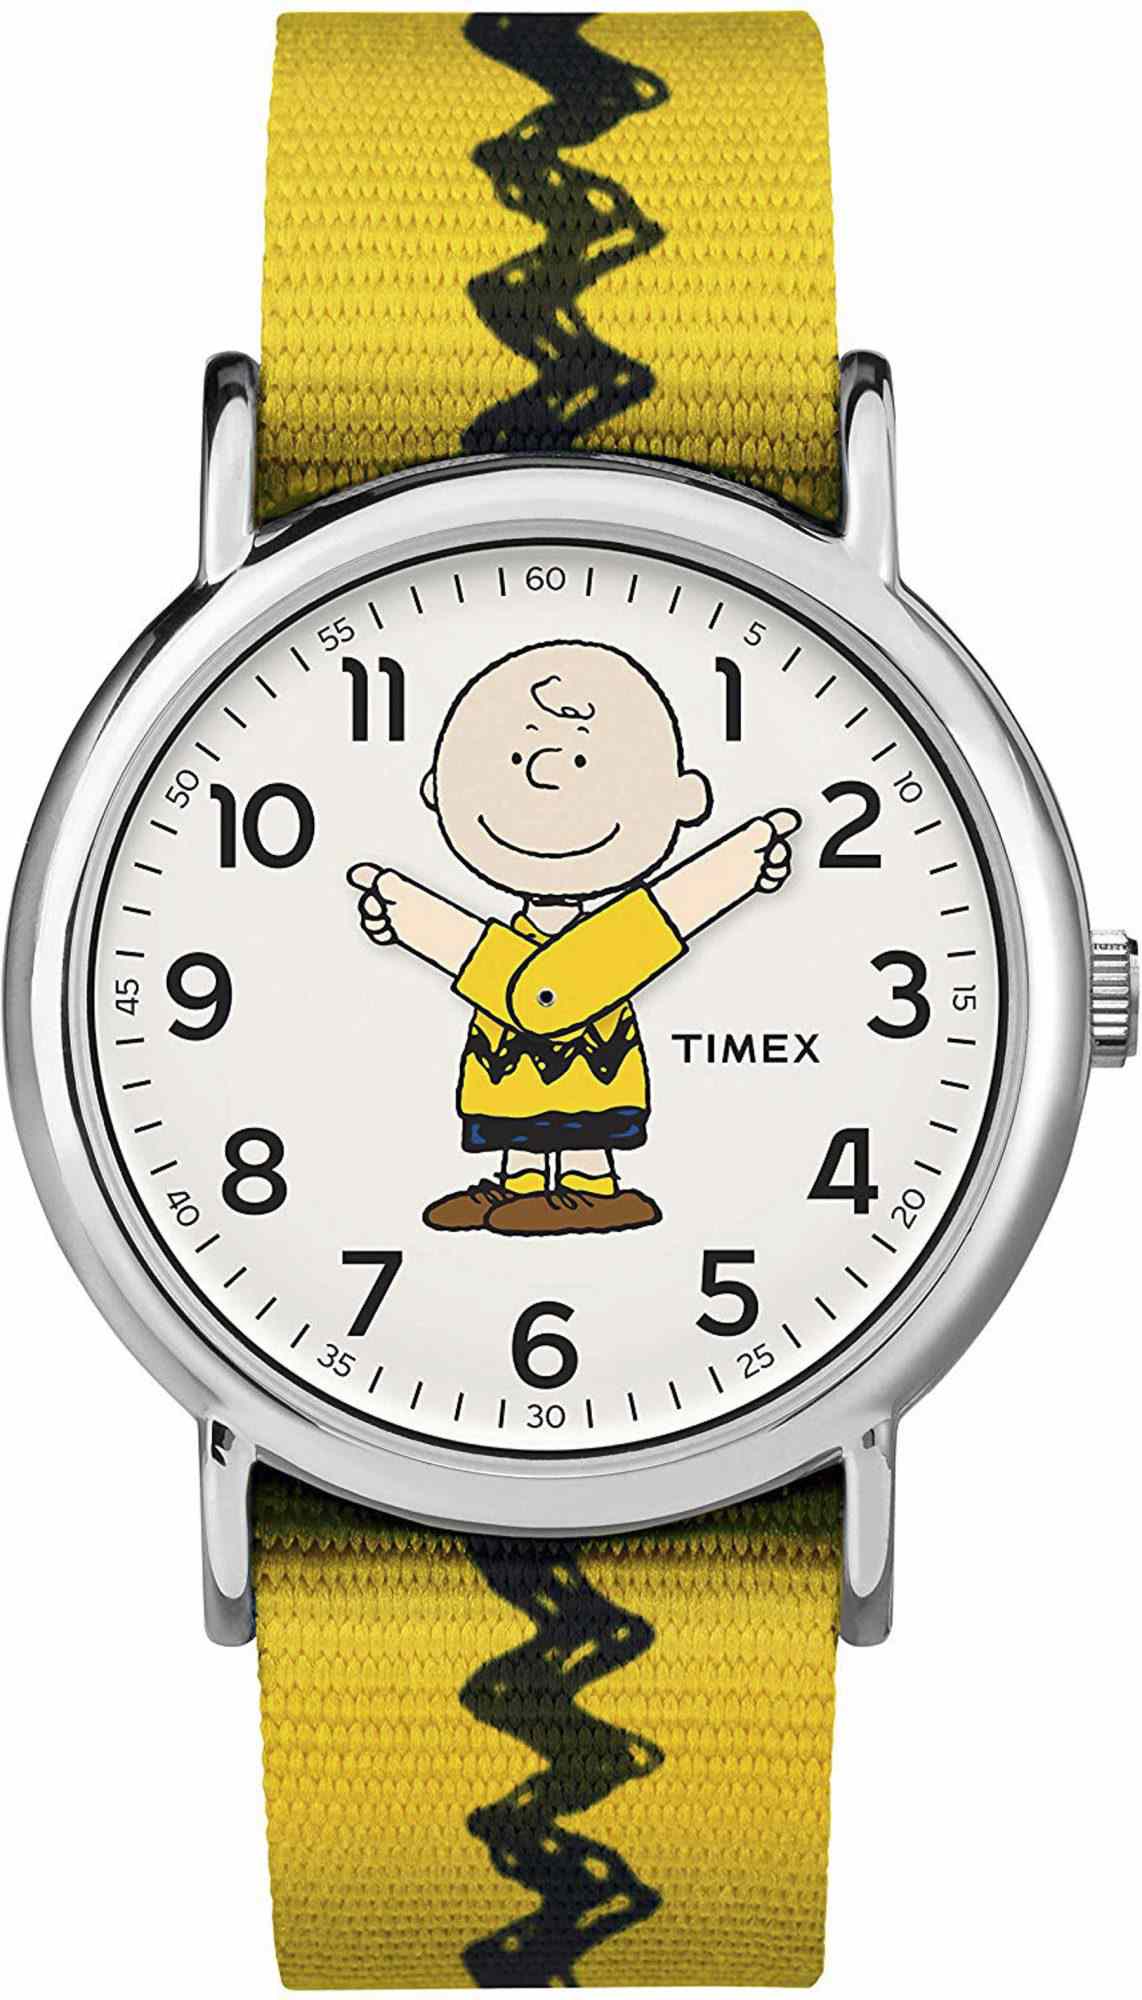 Charlie Brown merchandise